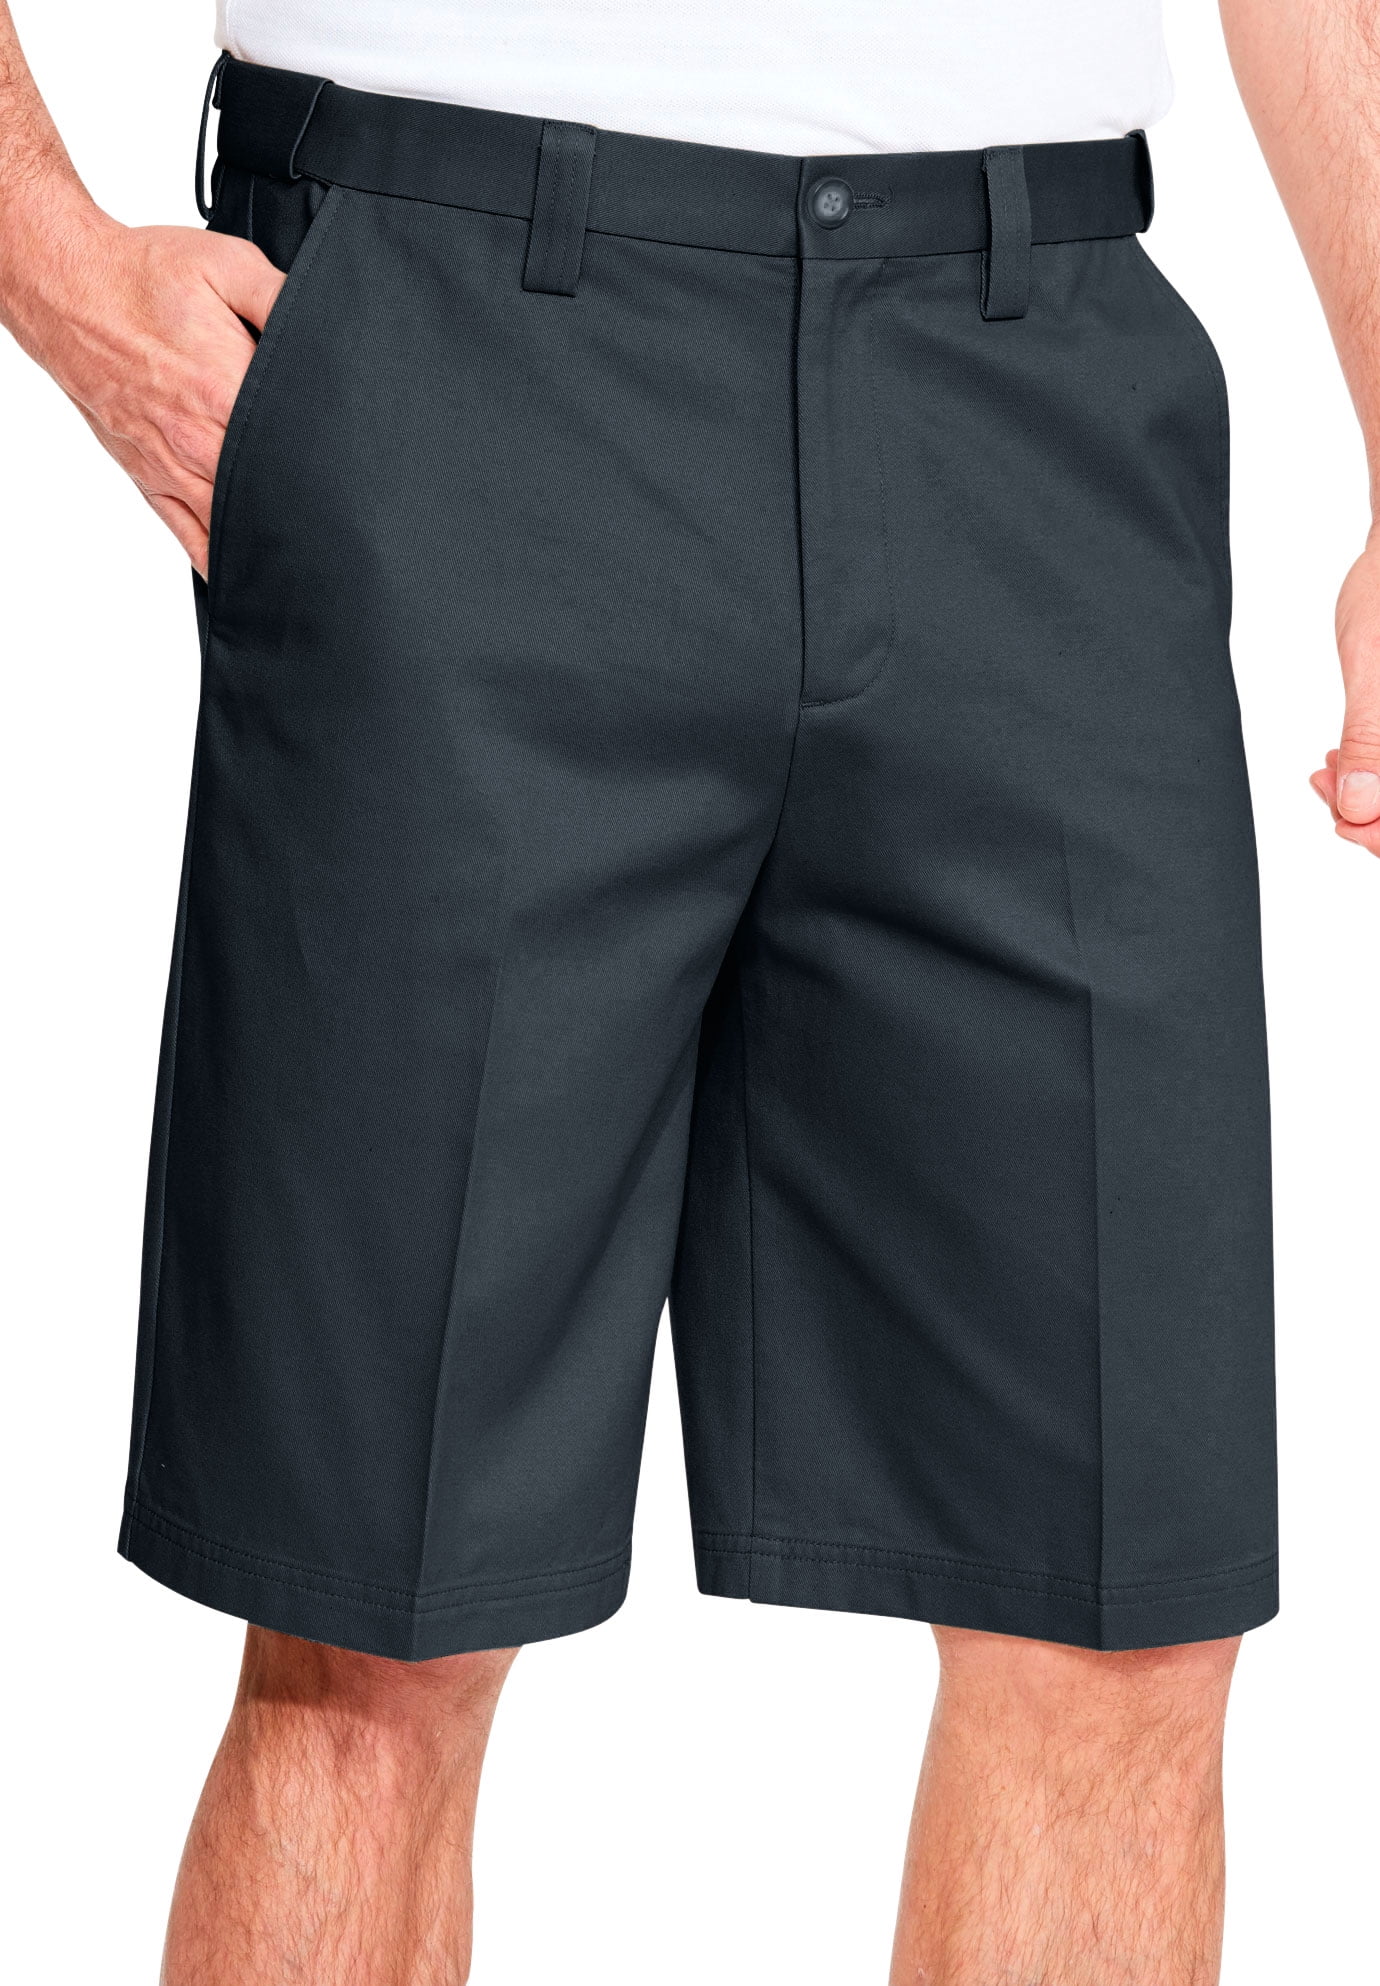 geoffrey beene men's extender waist shorts